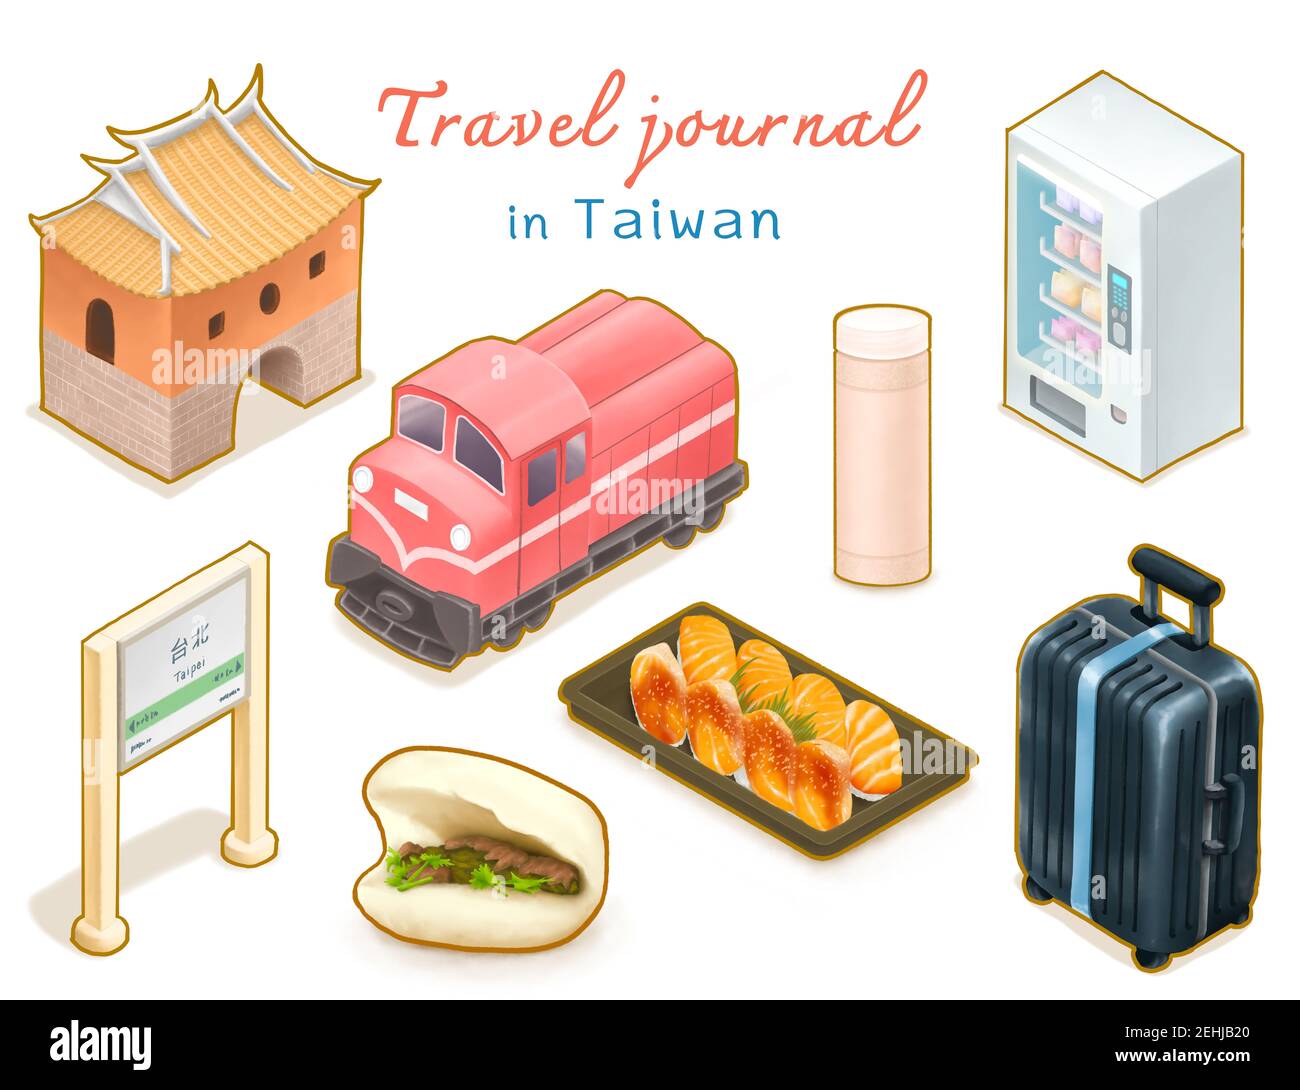 Travel Journal in Taiwan collection, digital painting of Gua bao, vending machine, salmon sushi, Alishan railway, luggage, The north gate isometric ca Stock Photo